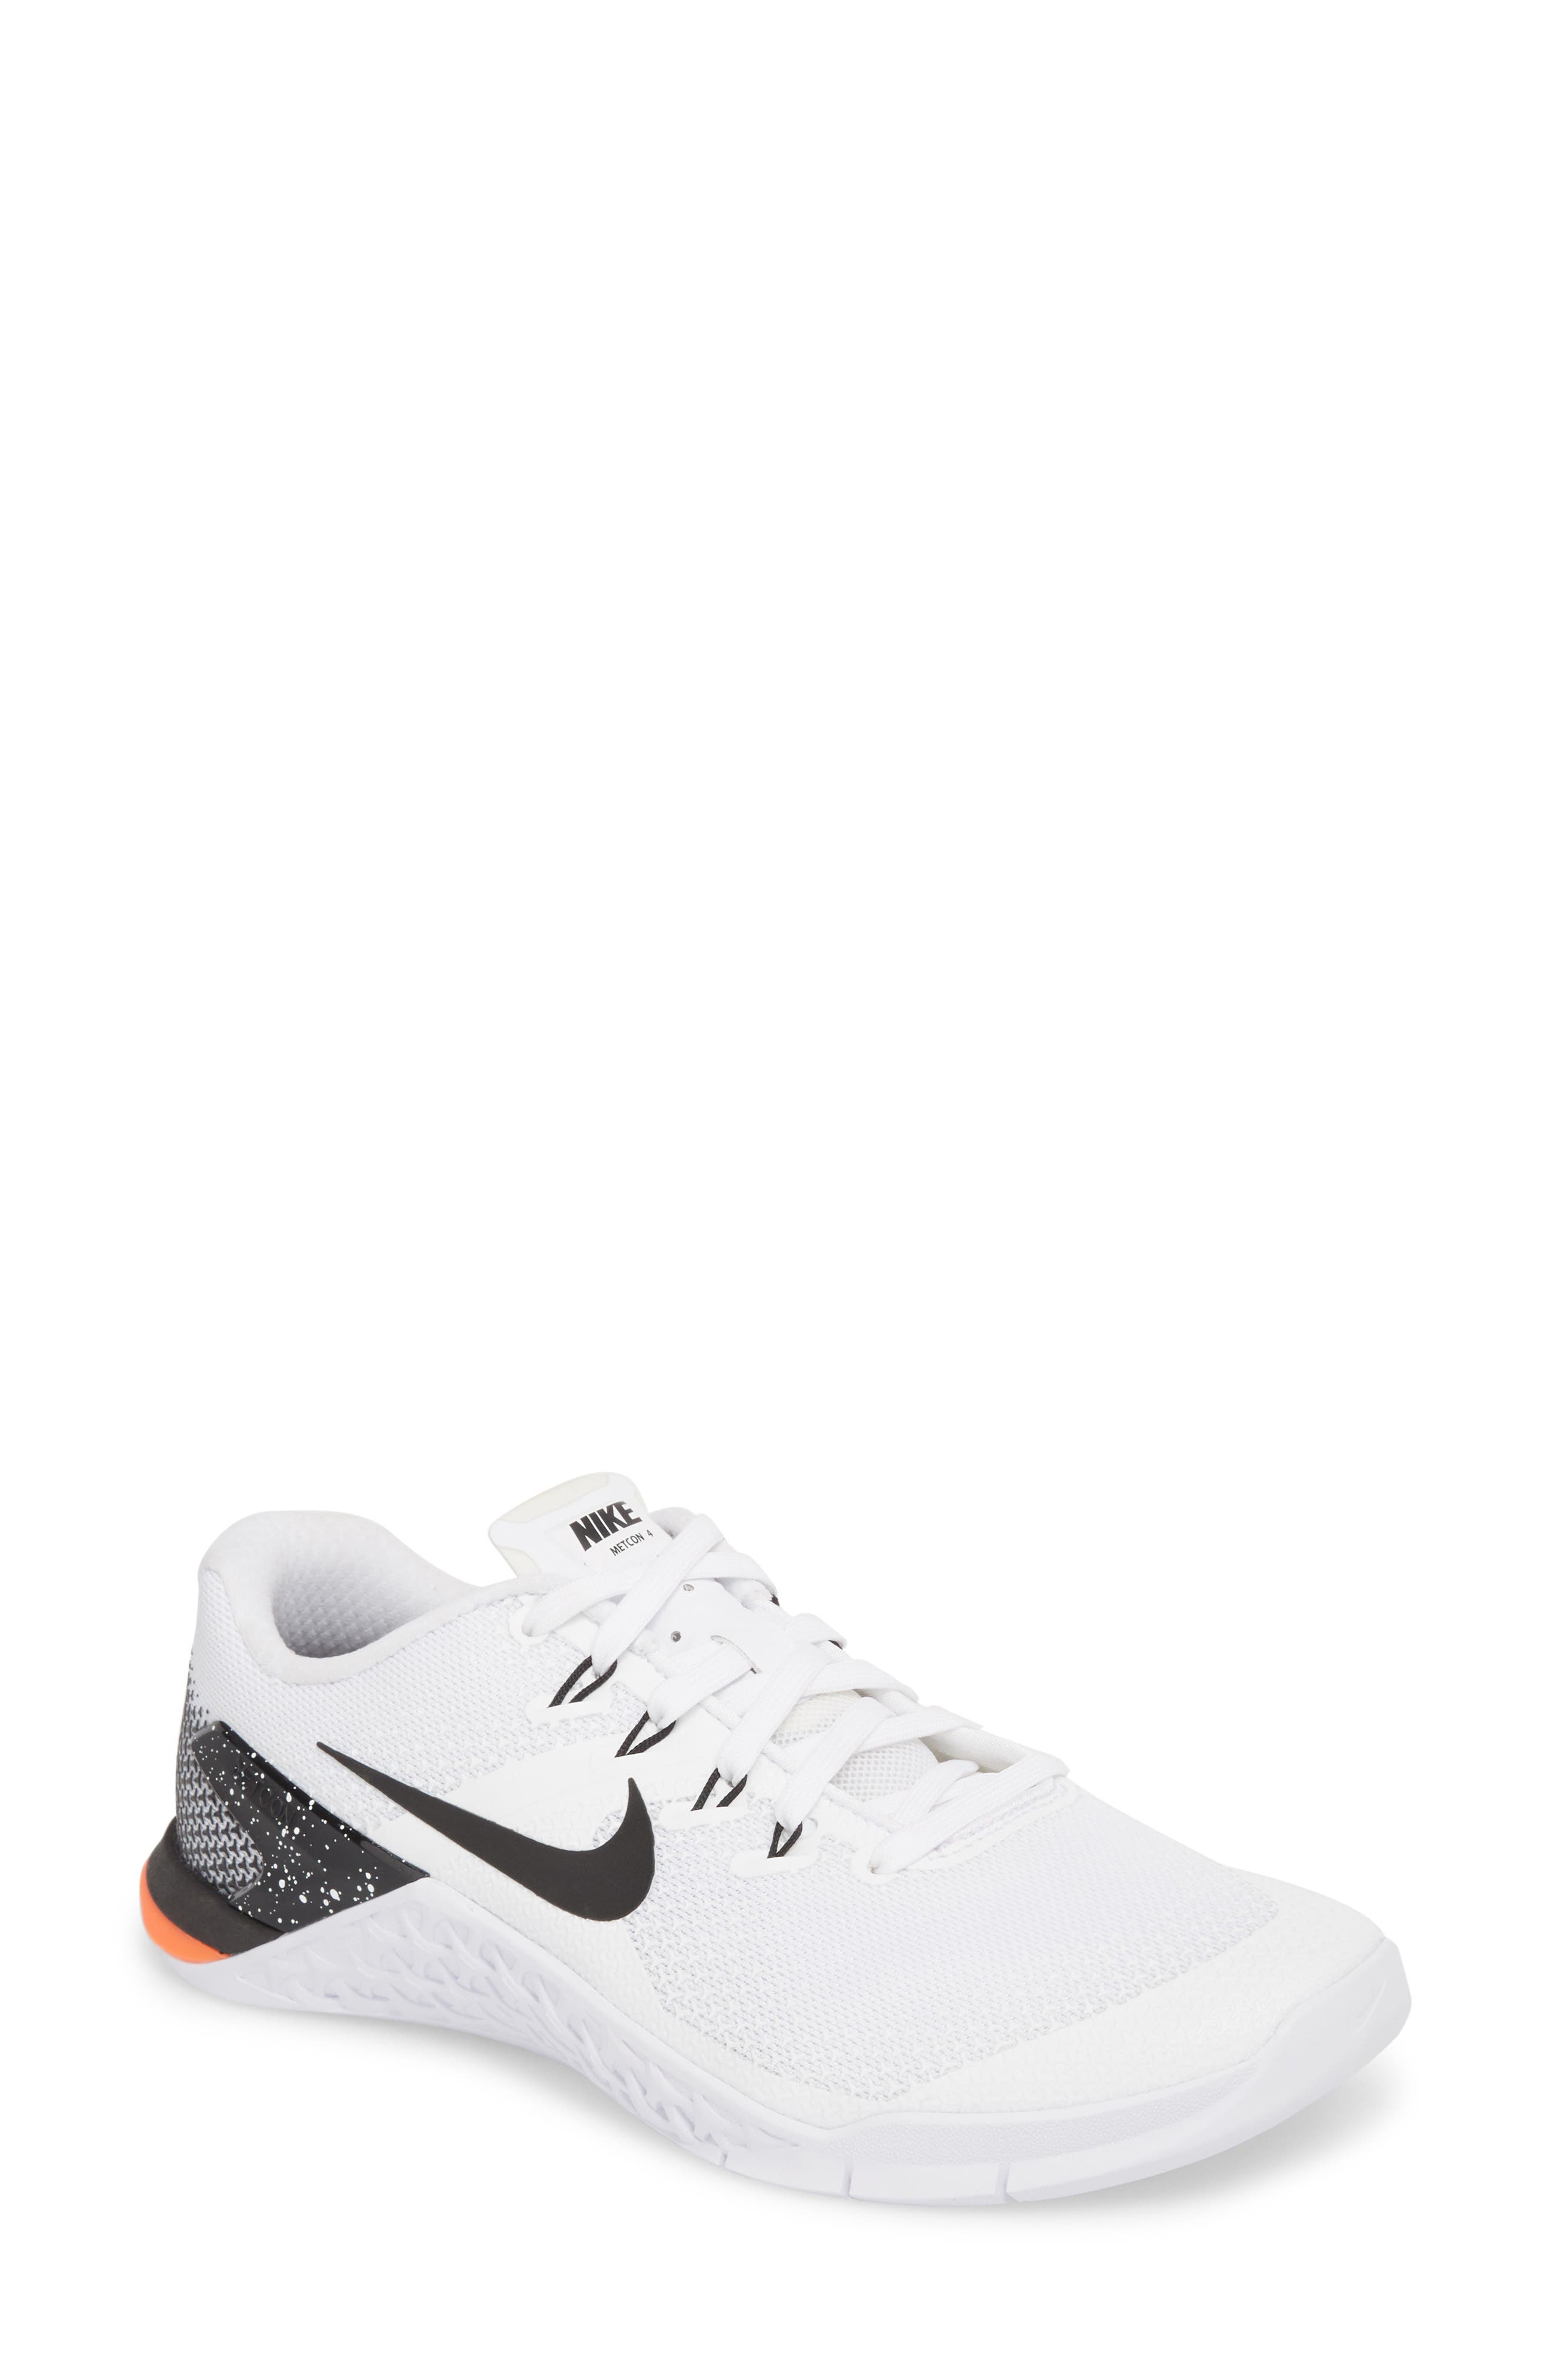 Nike | Metcon 4 Training Shoe 